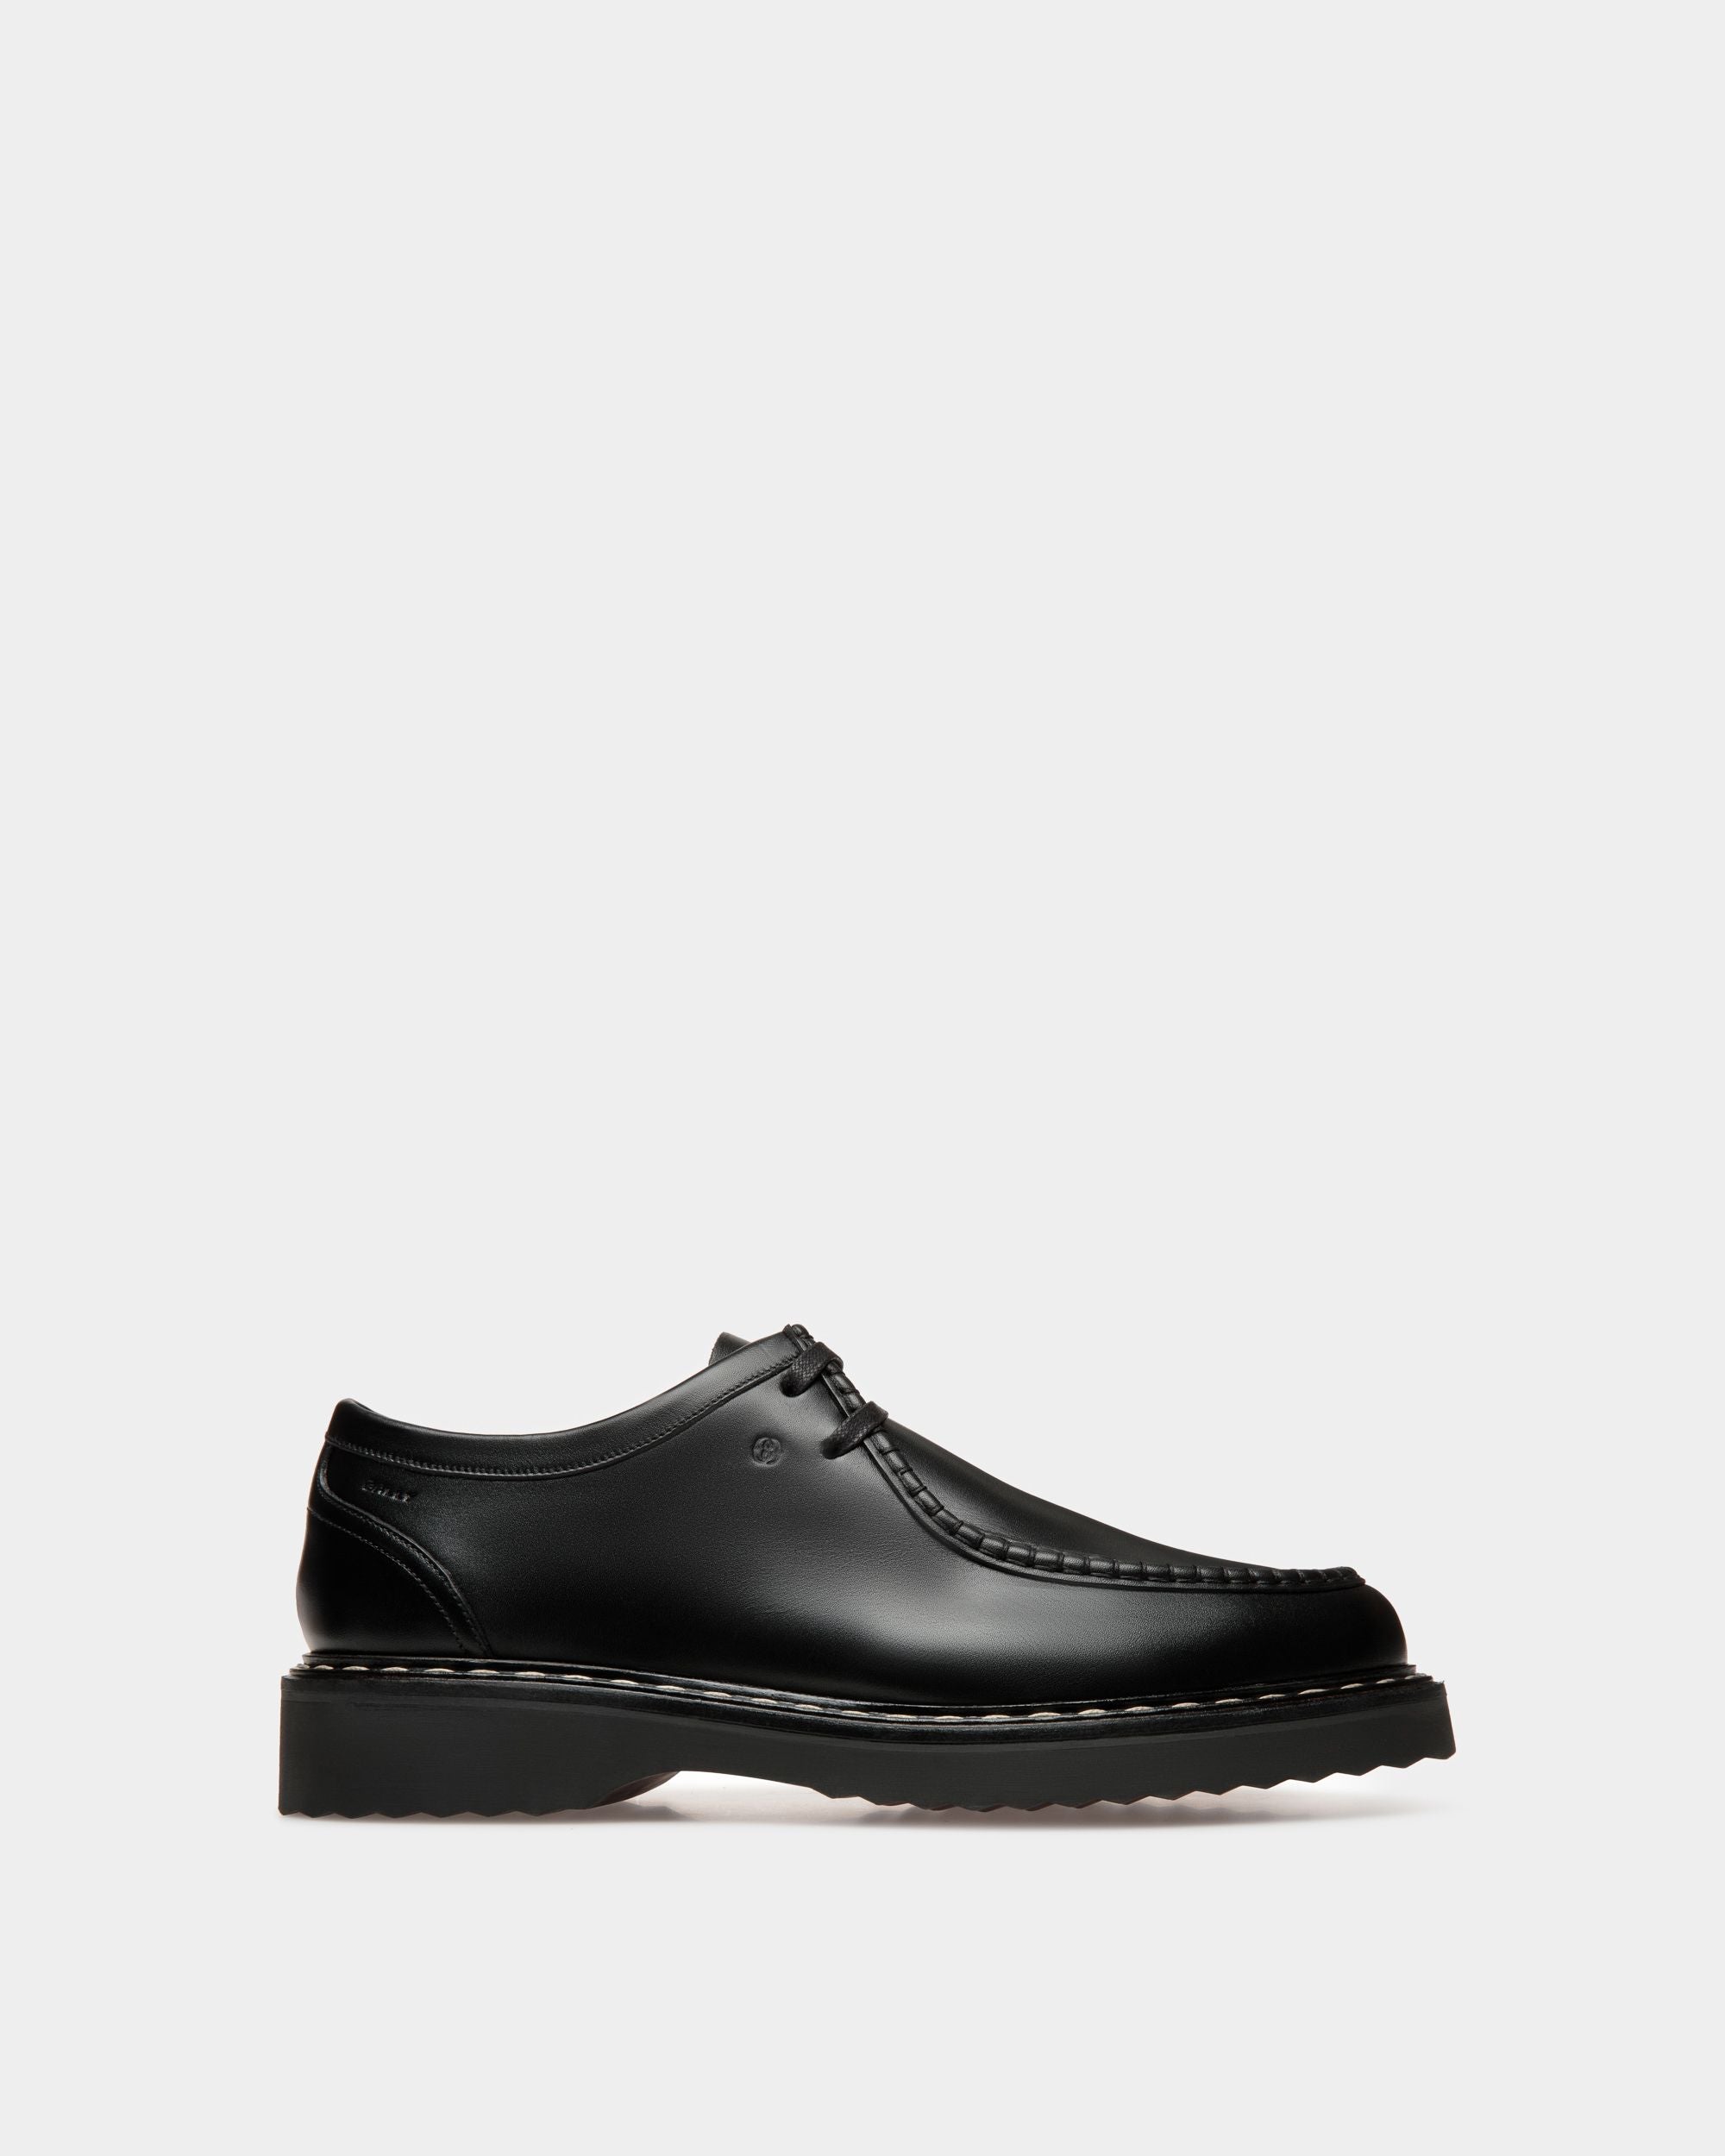 Neasden Derby Shoes | Men's Shoes | Black Leather | Bally | Still Life Side